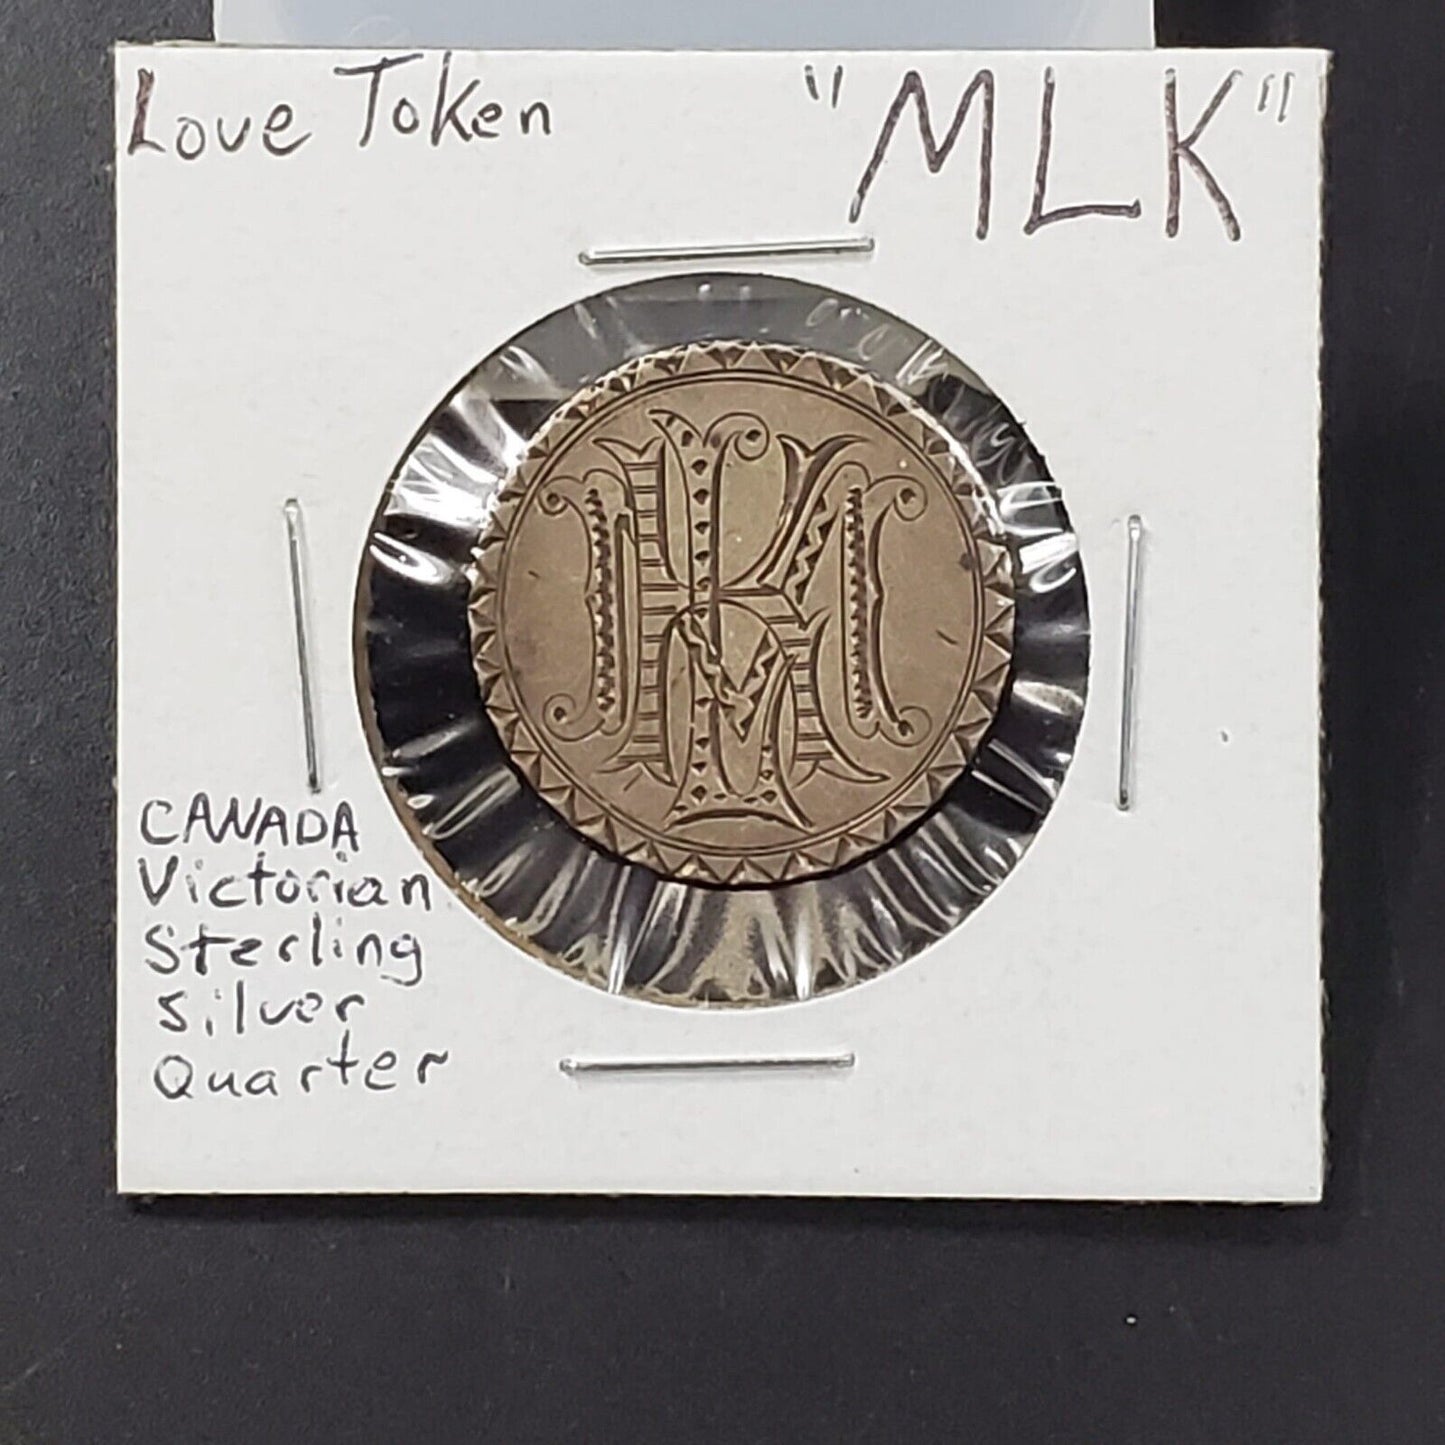 Canada Victorian Era Sterling Silver Quarter Love Token MLK Initials Engraved